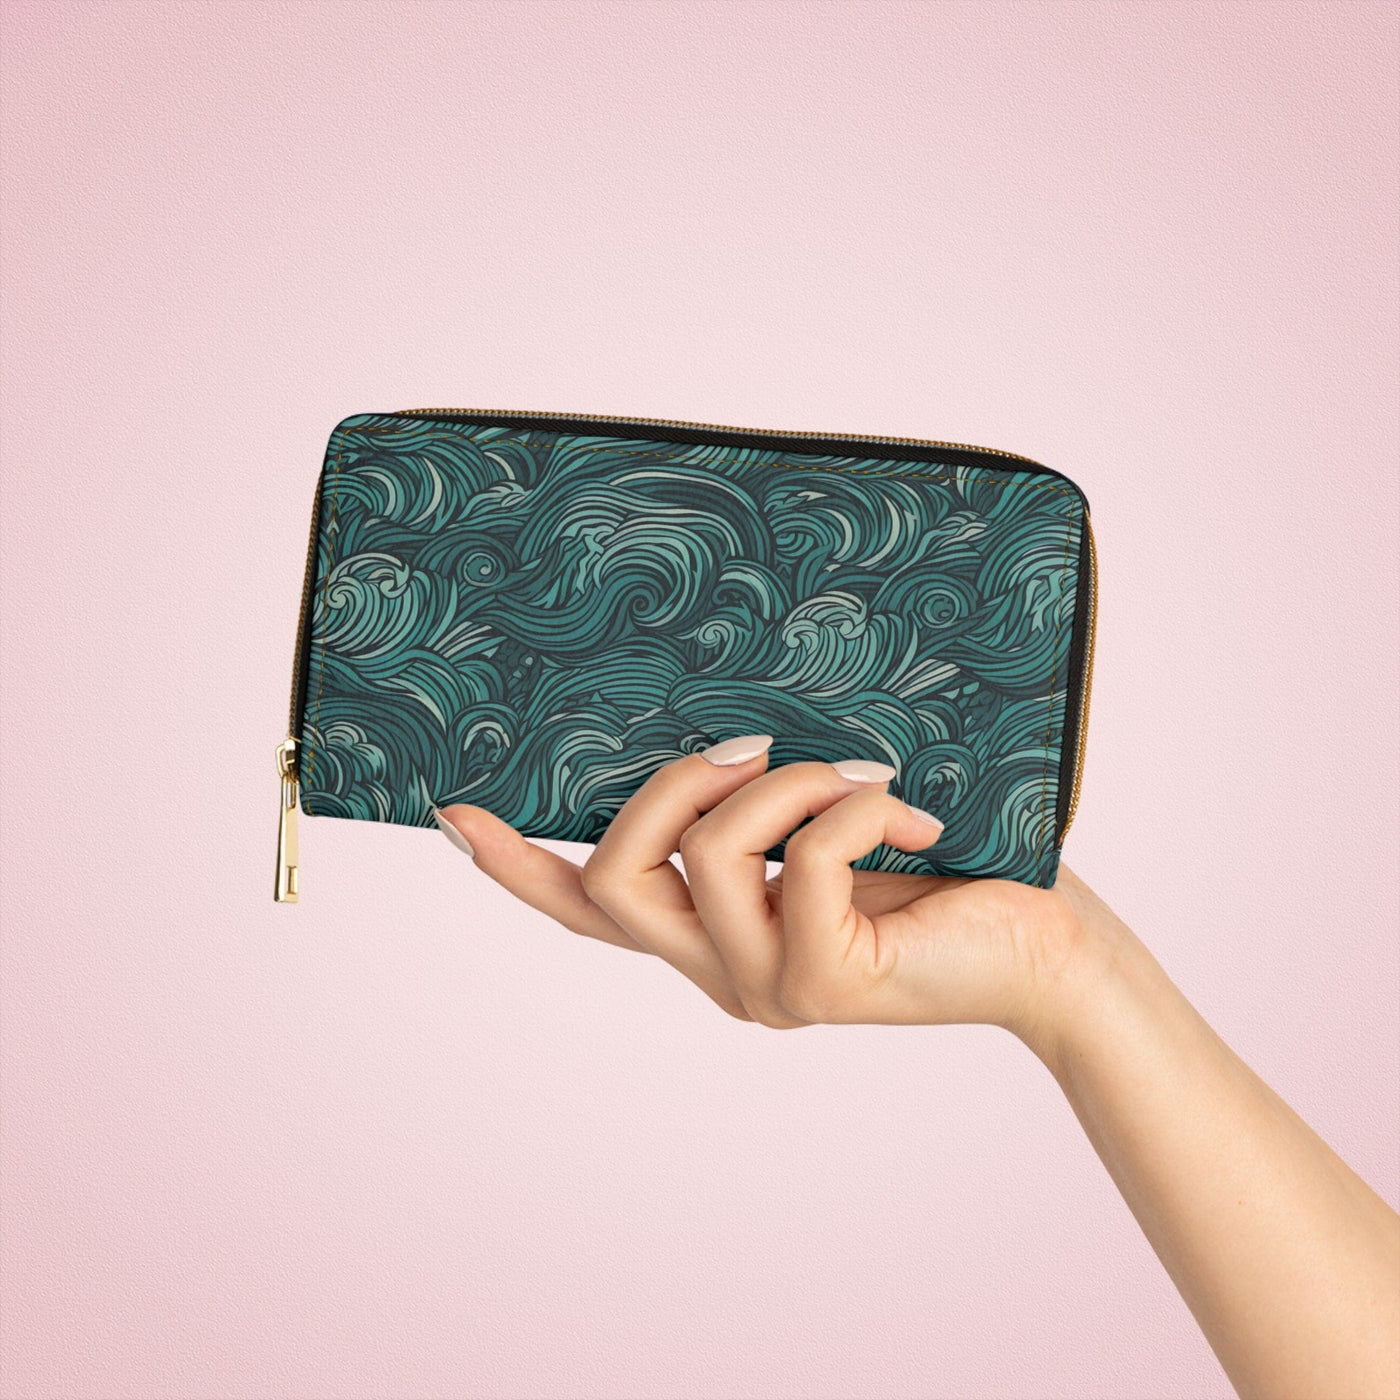 Water Wave Mint Green Illustration Womens Zipper Wallet Clutch Purse - Bags